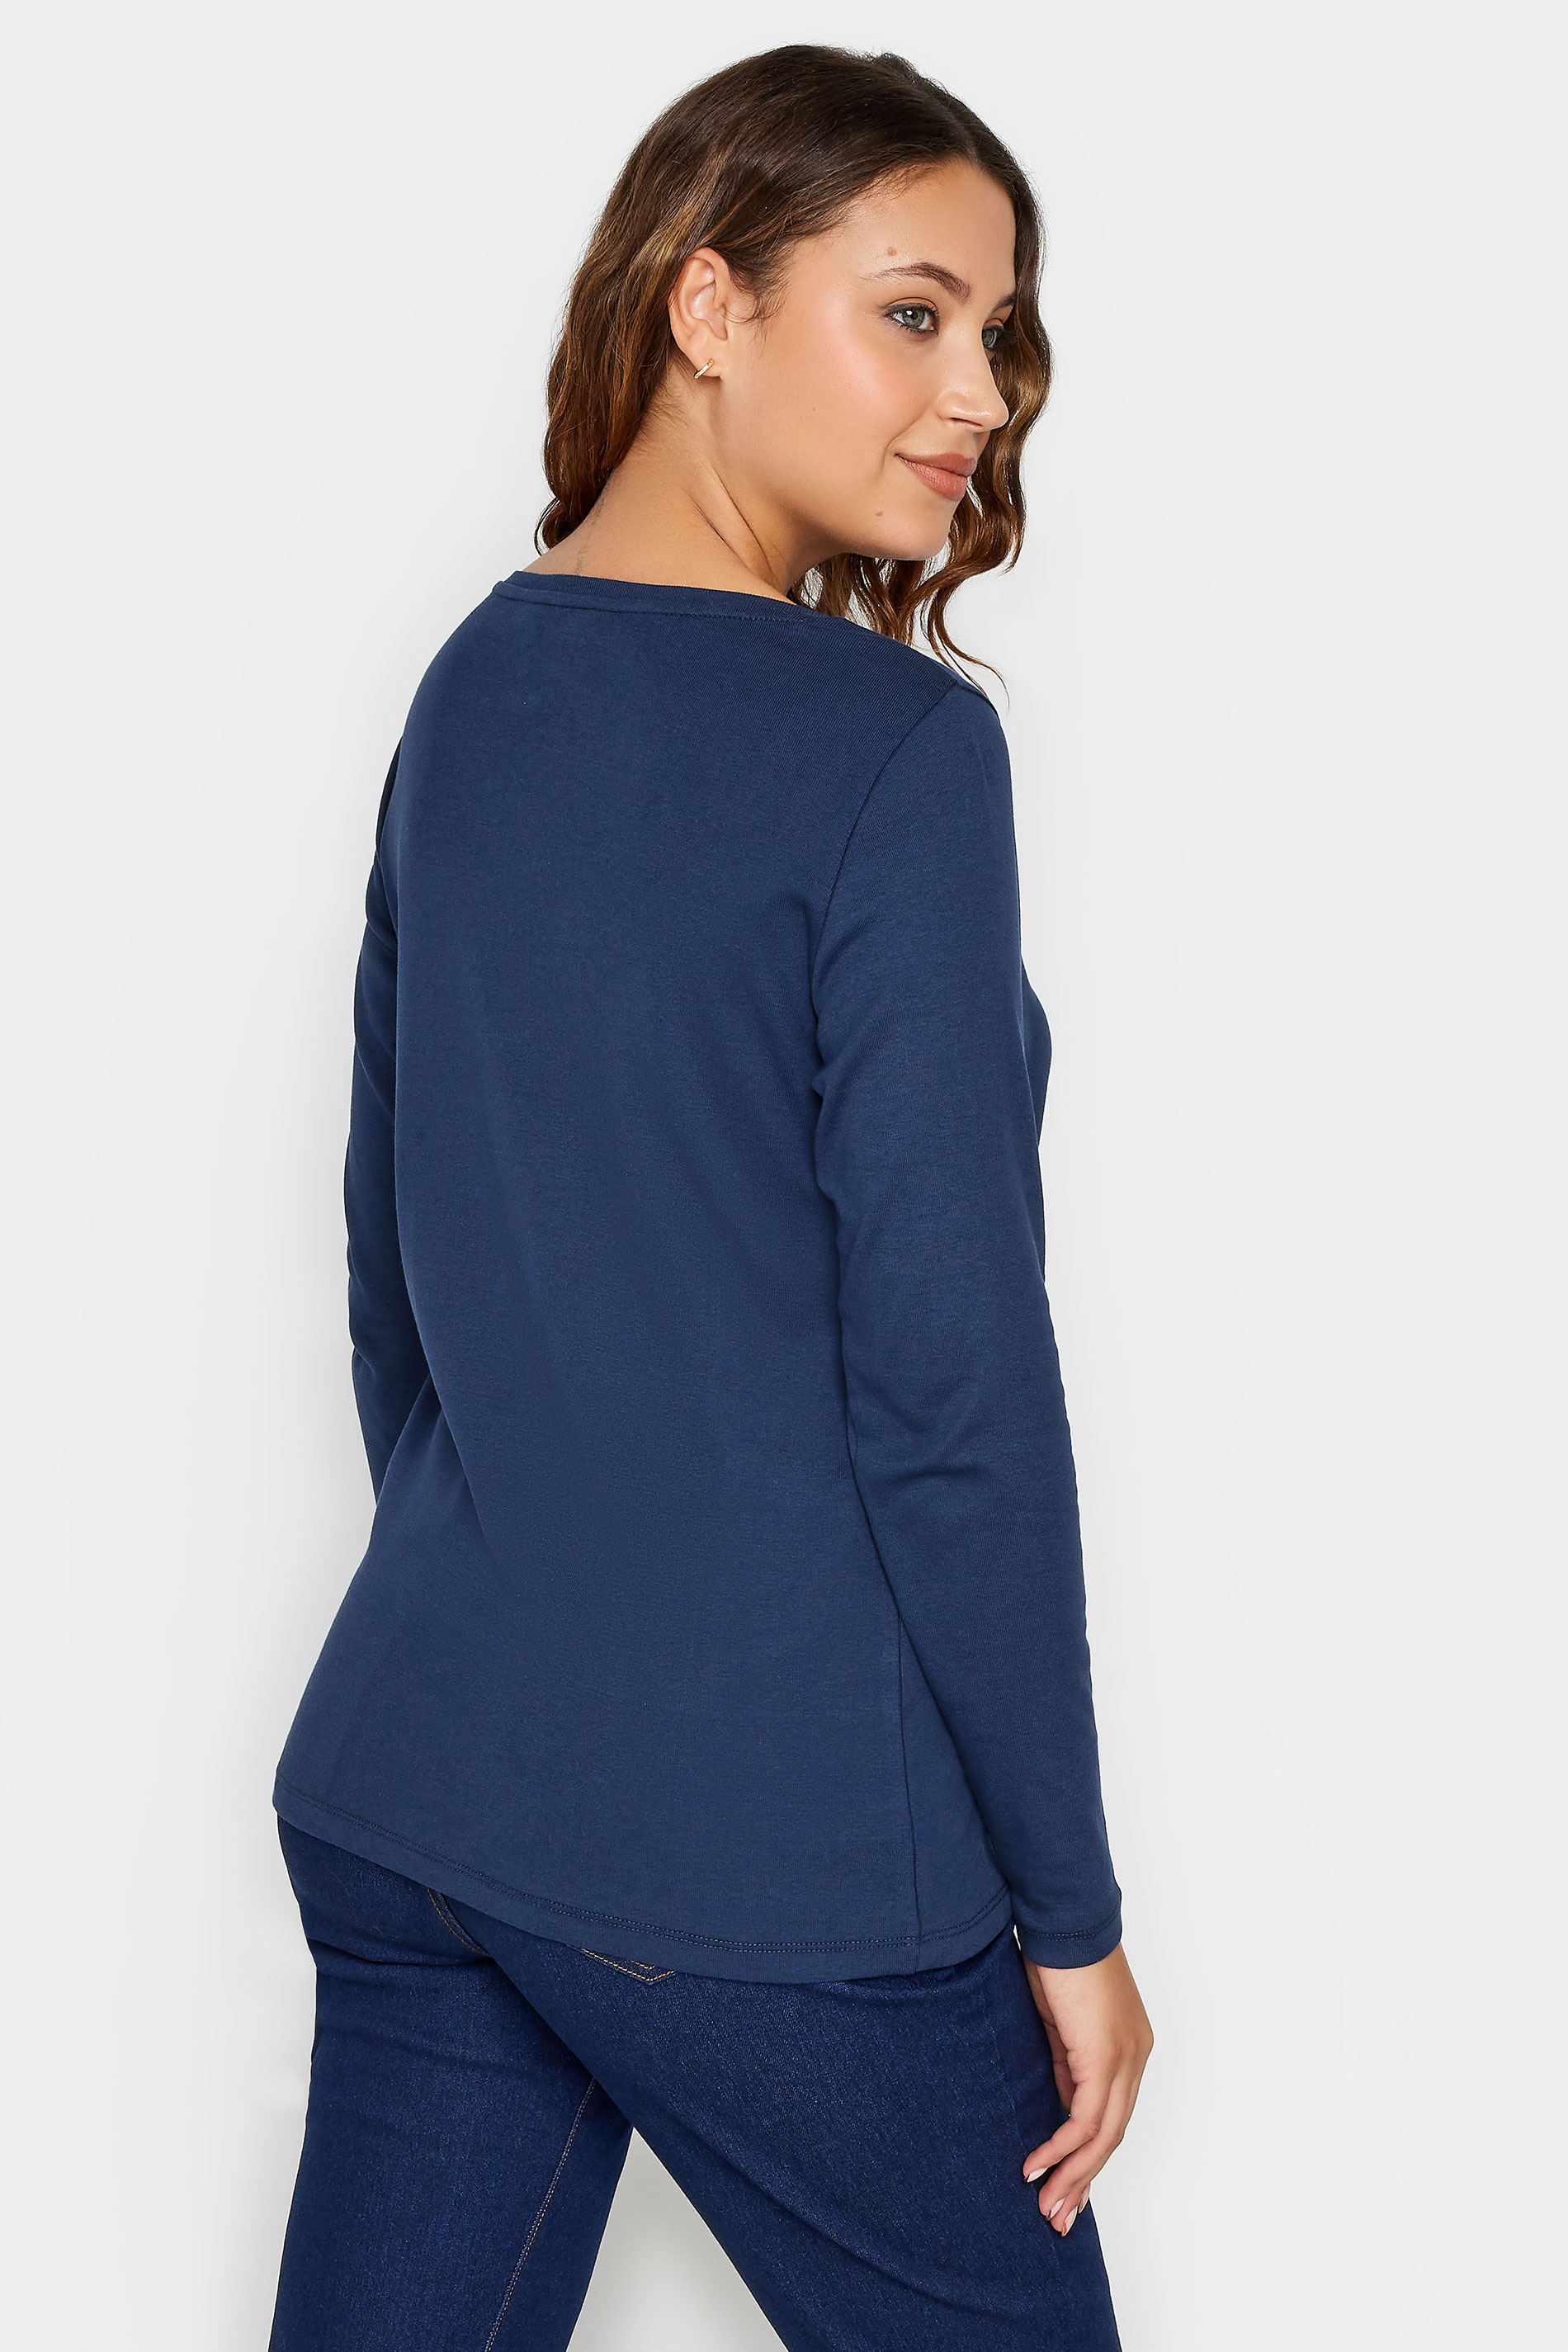 LTS Tall Navy Blue Long Sleeve Cotton T-Shirt | Long Tall Sally  3